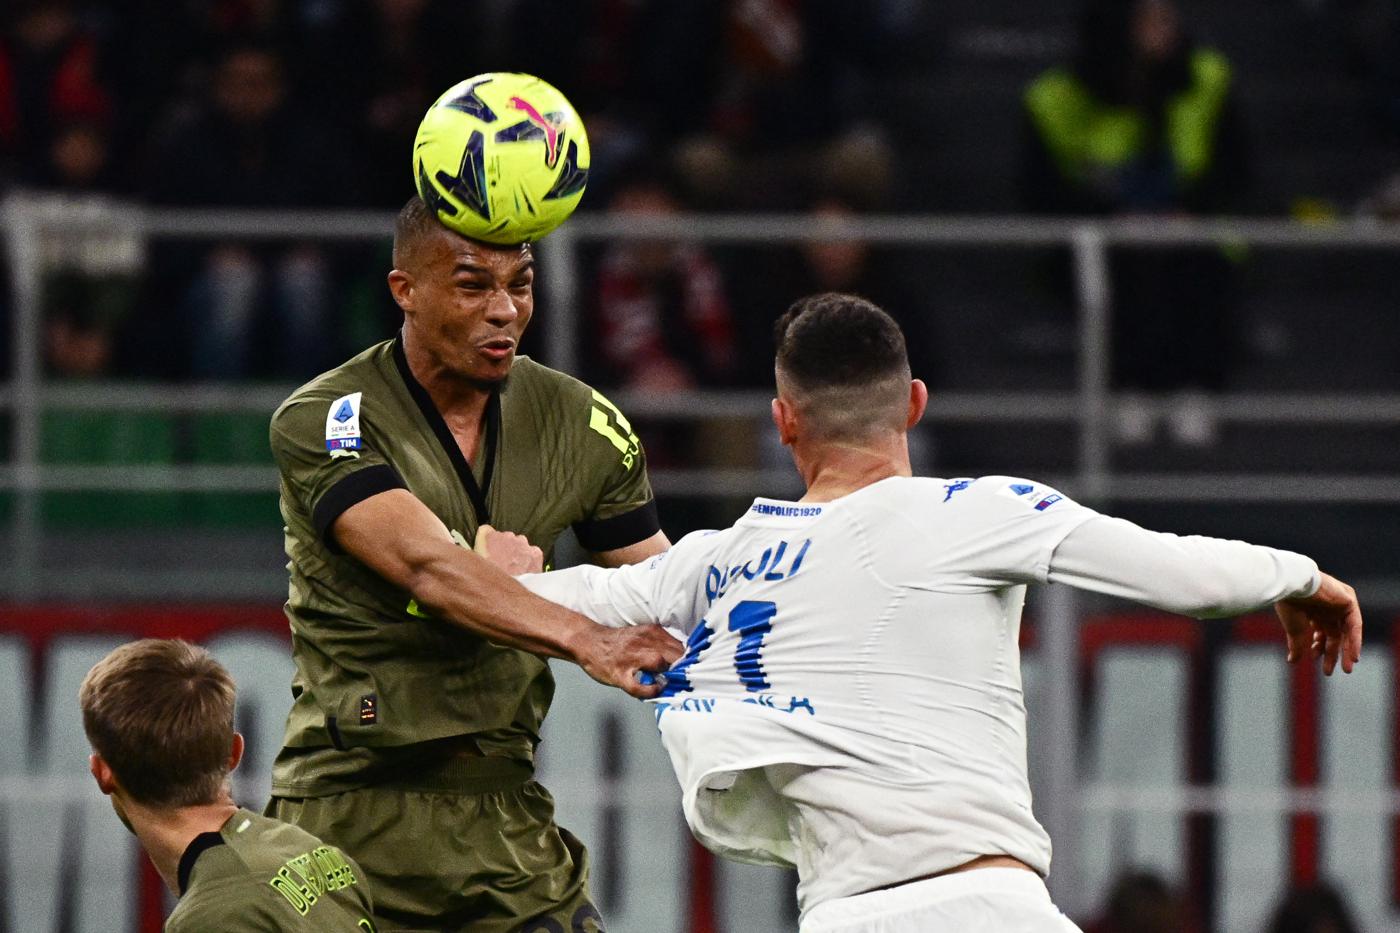 Milan vs Empoli - 0:0. Italian Championship, round 29. Match review, statistics